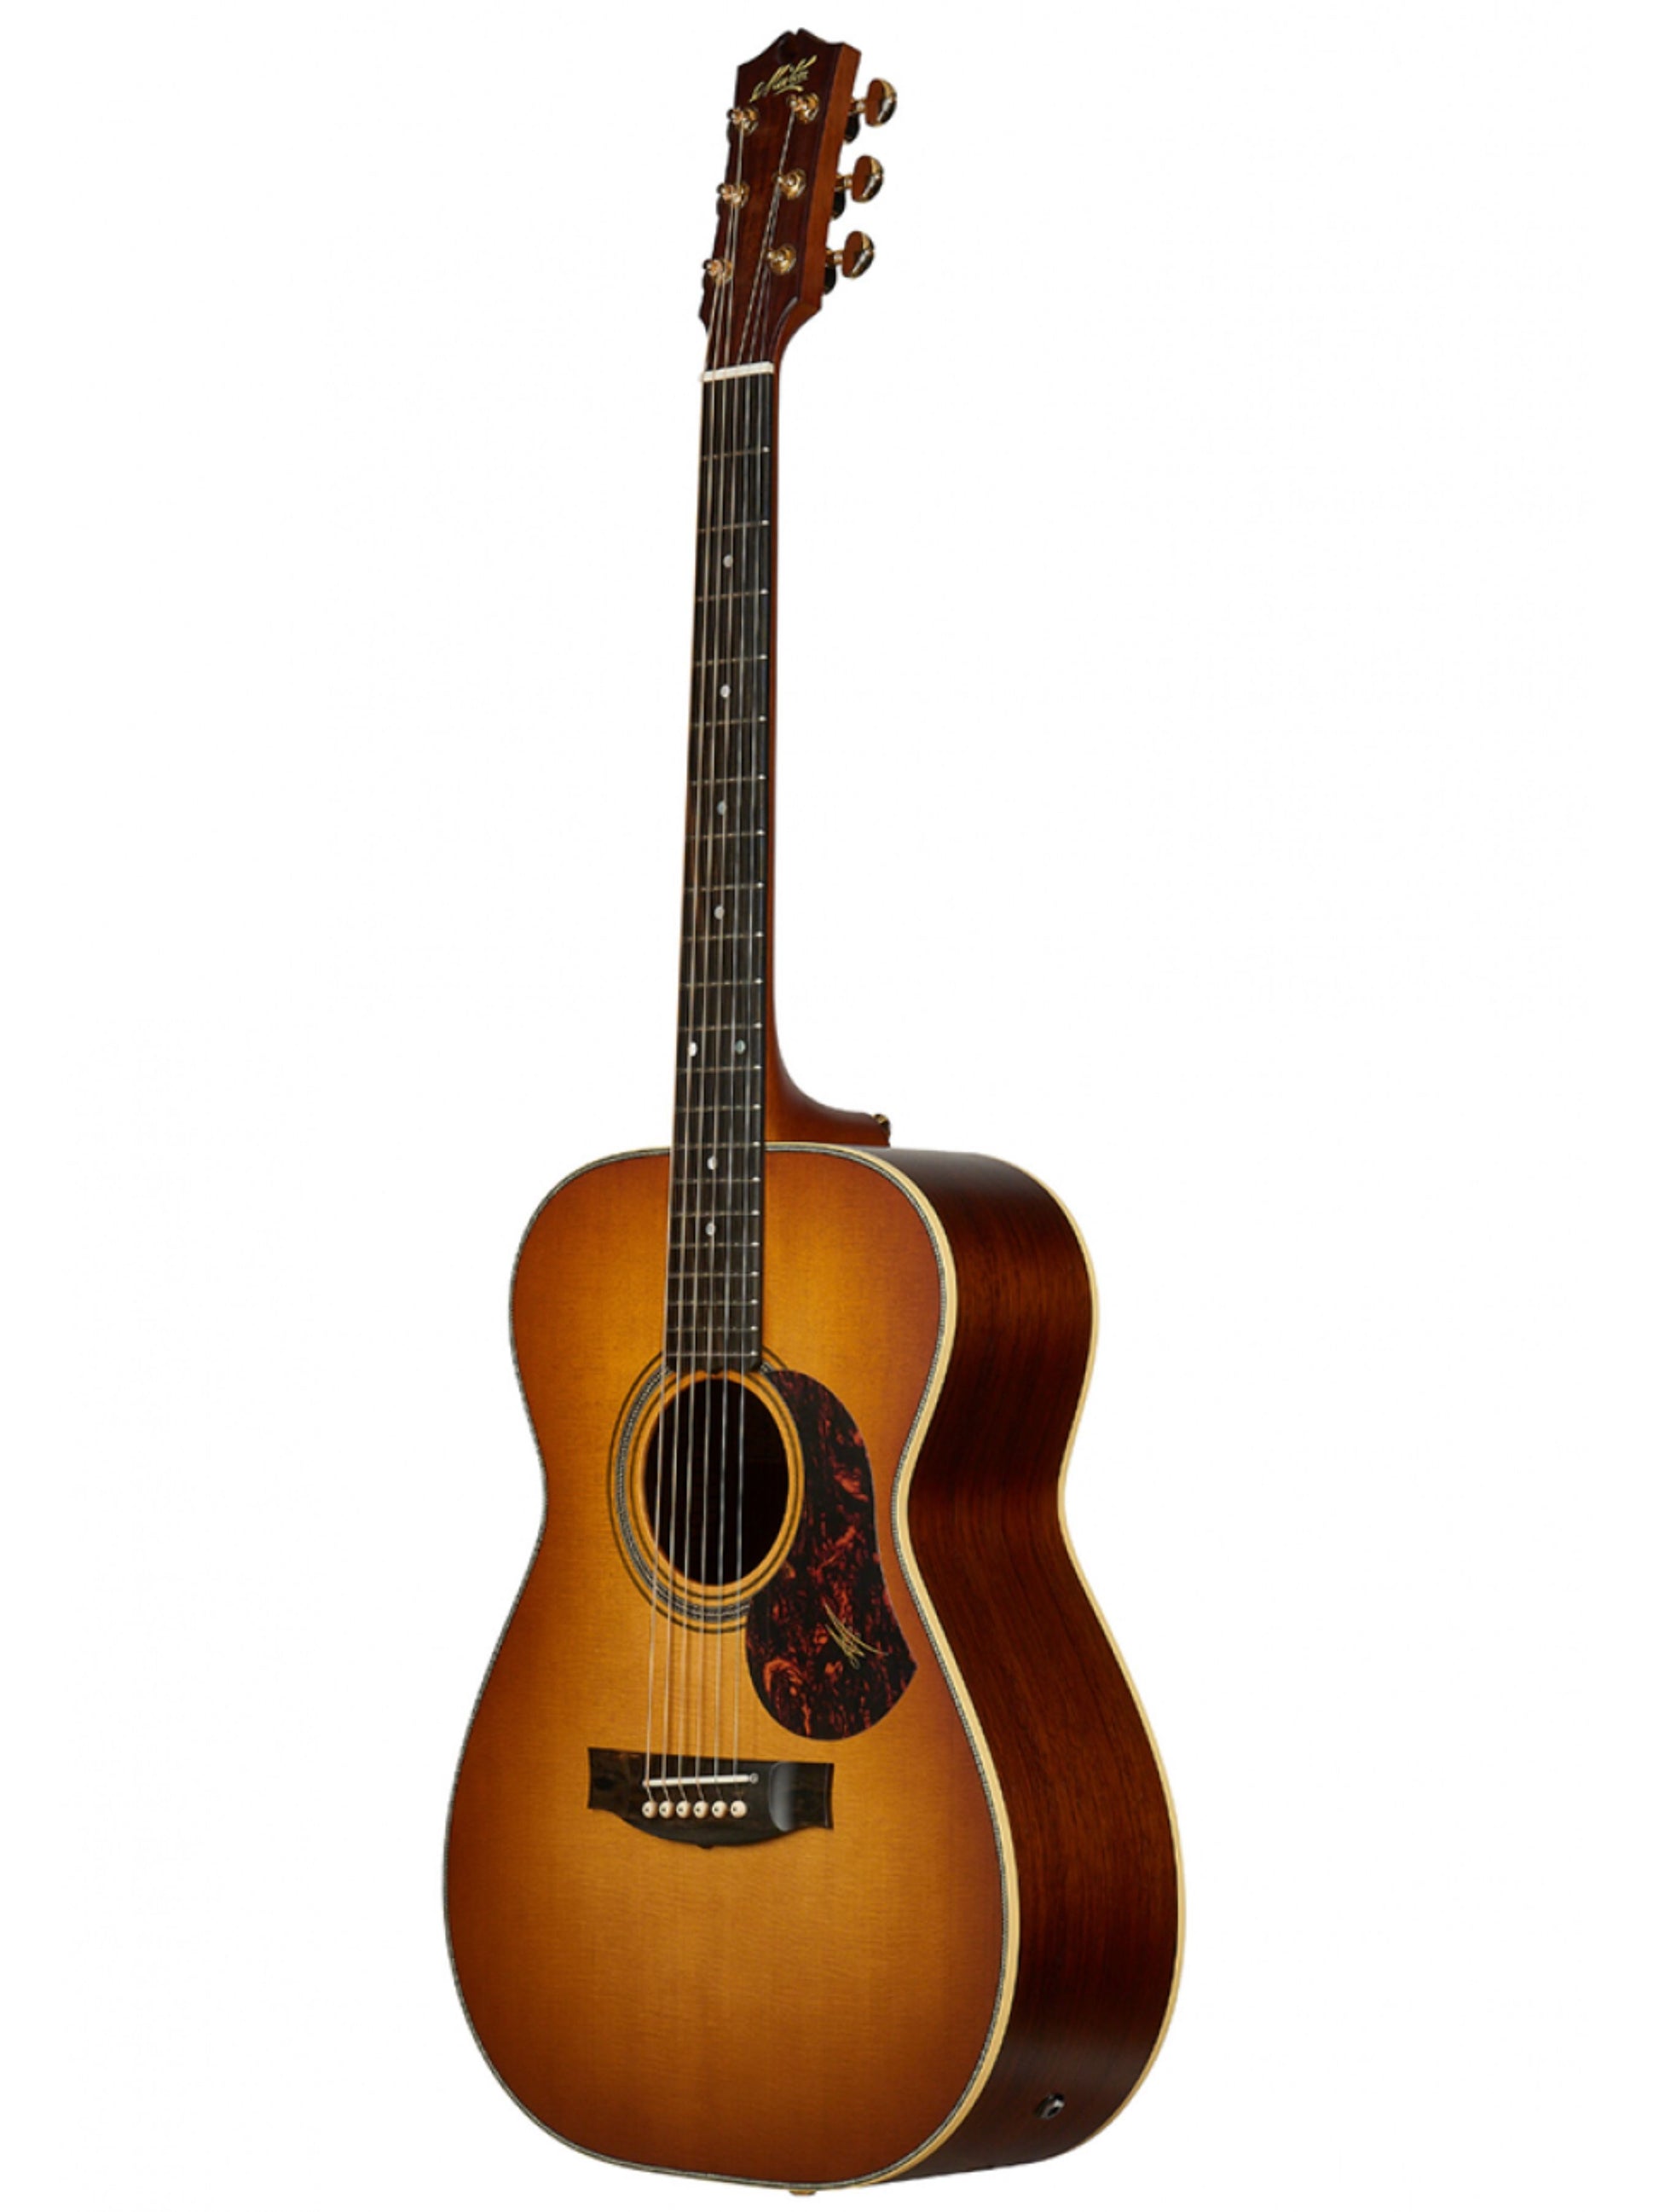 Maton EGB808 Nashville Acoustic Guitar